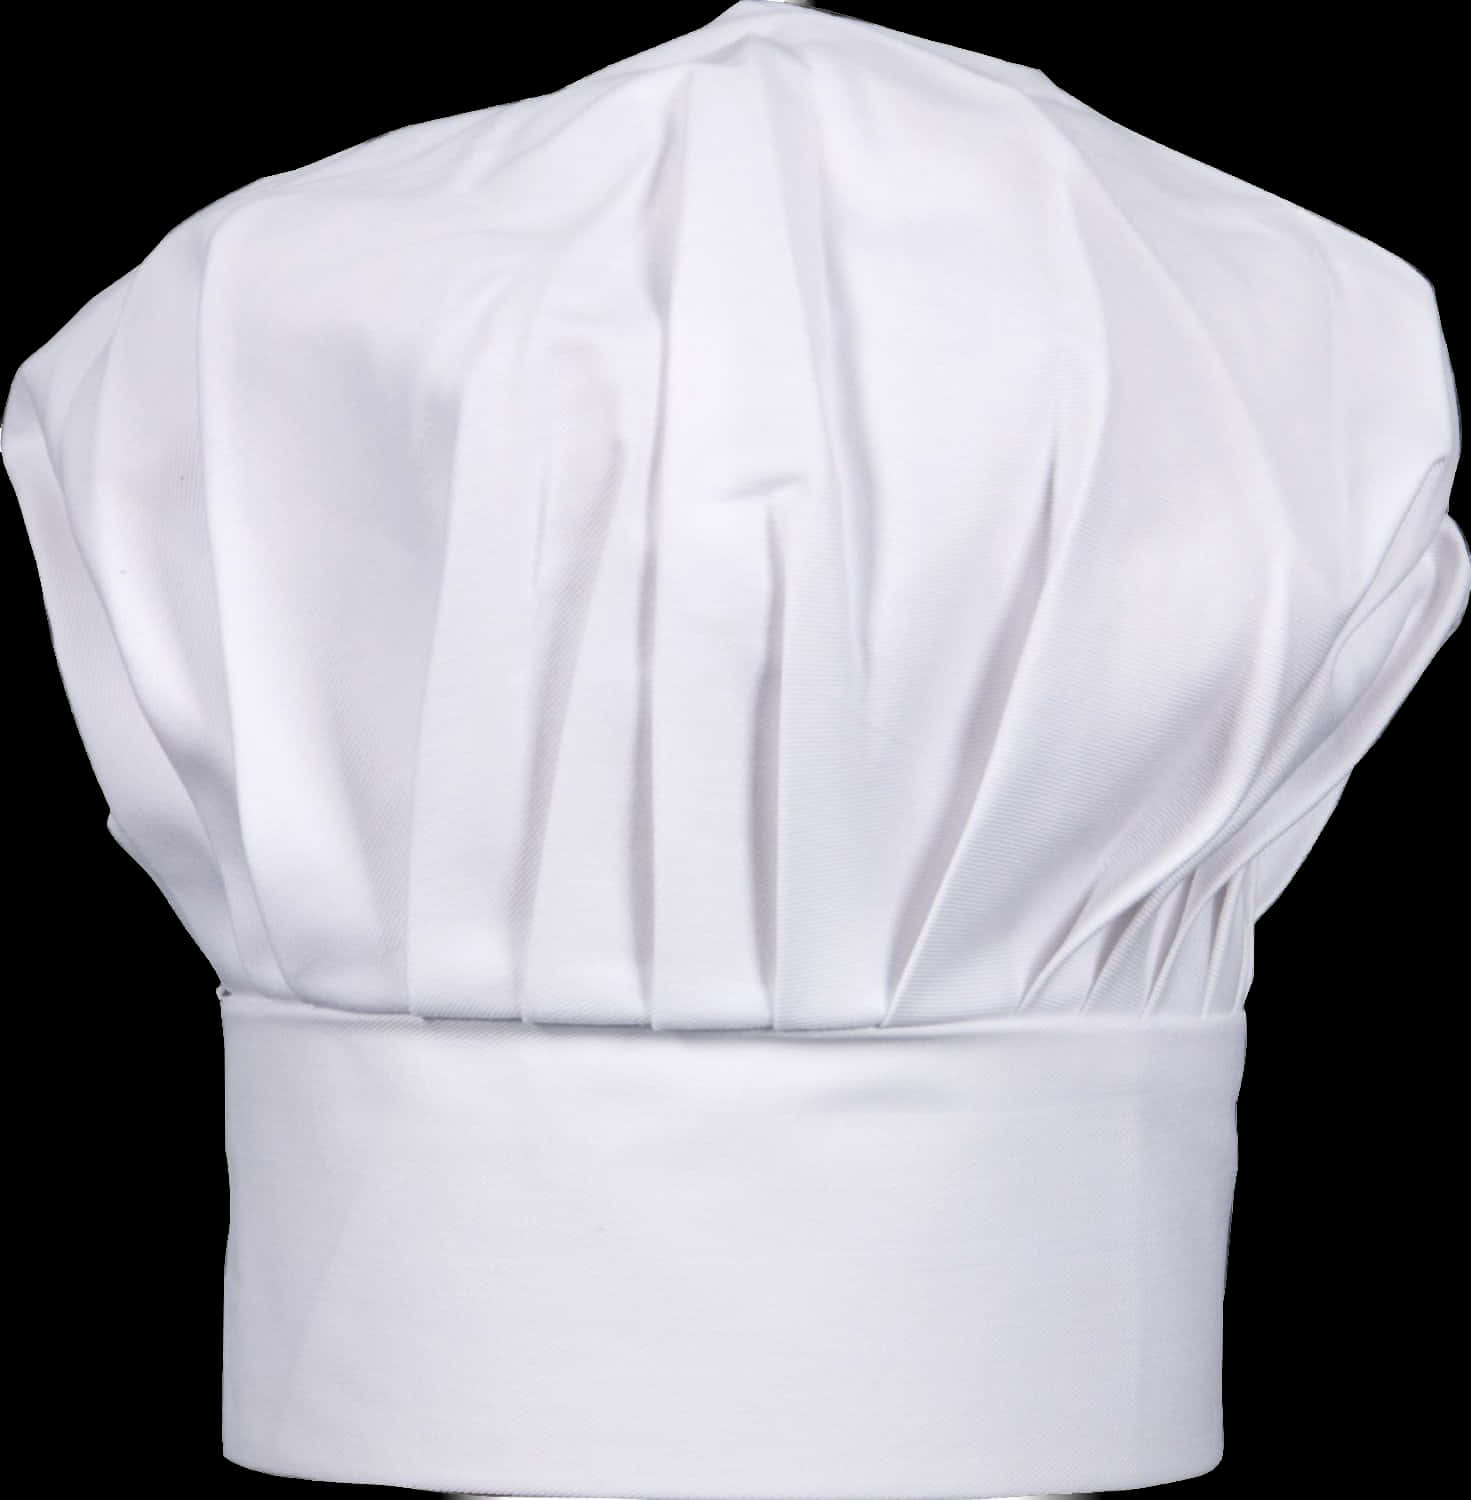 Professional White Chef Hat